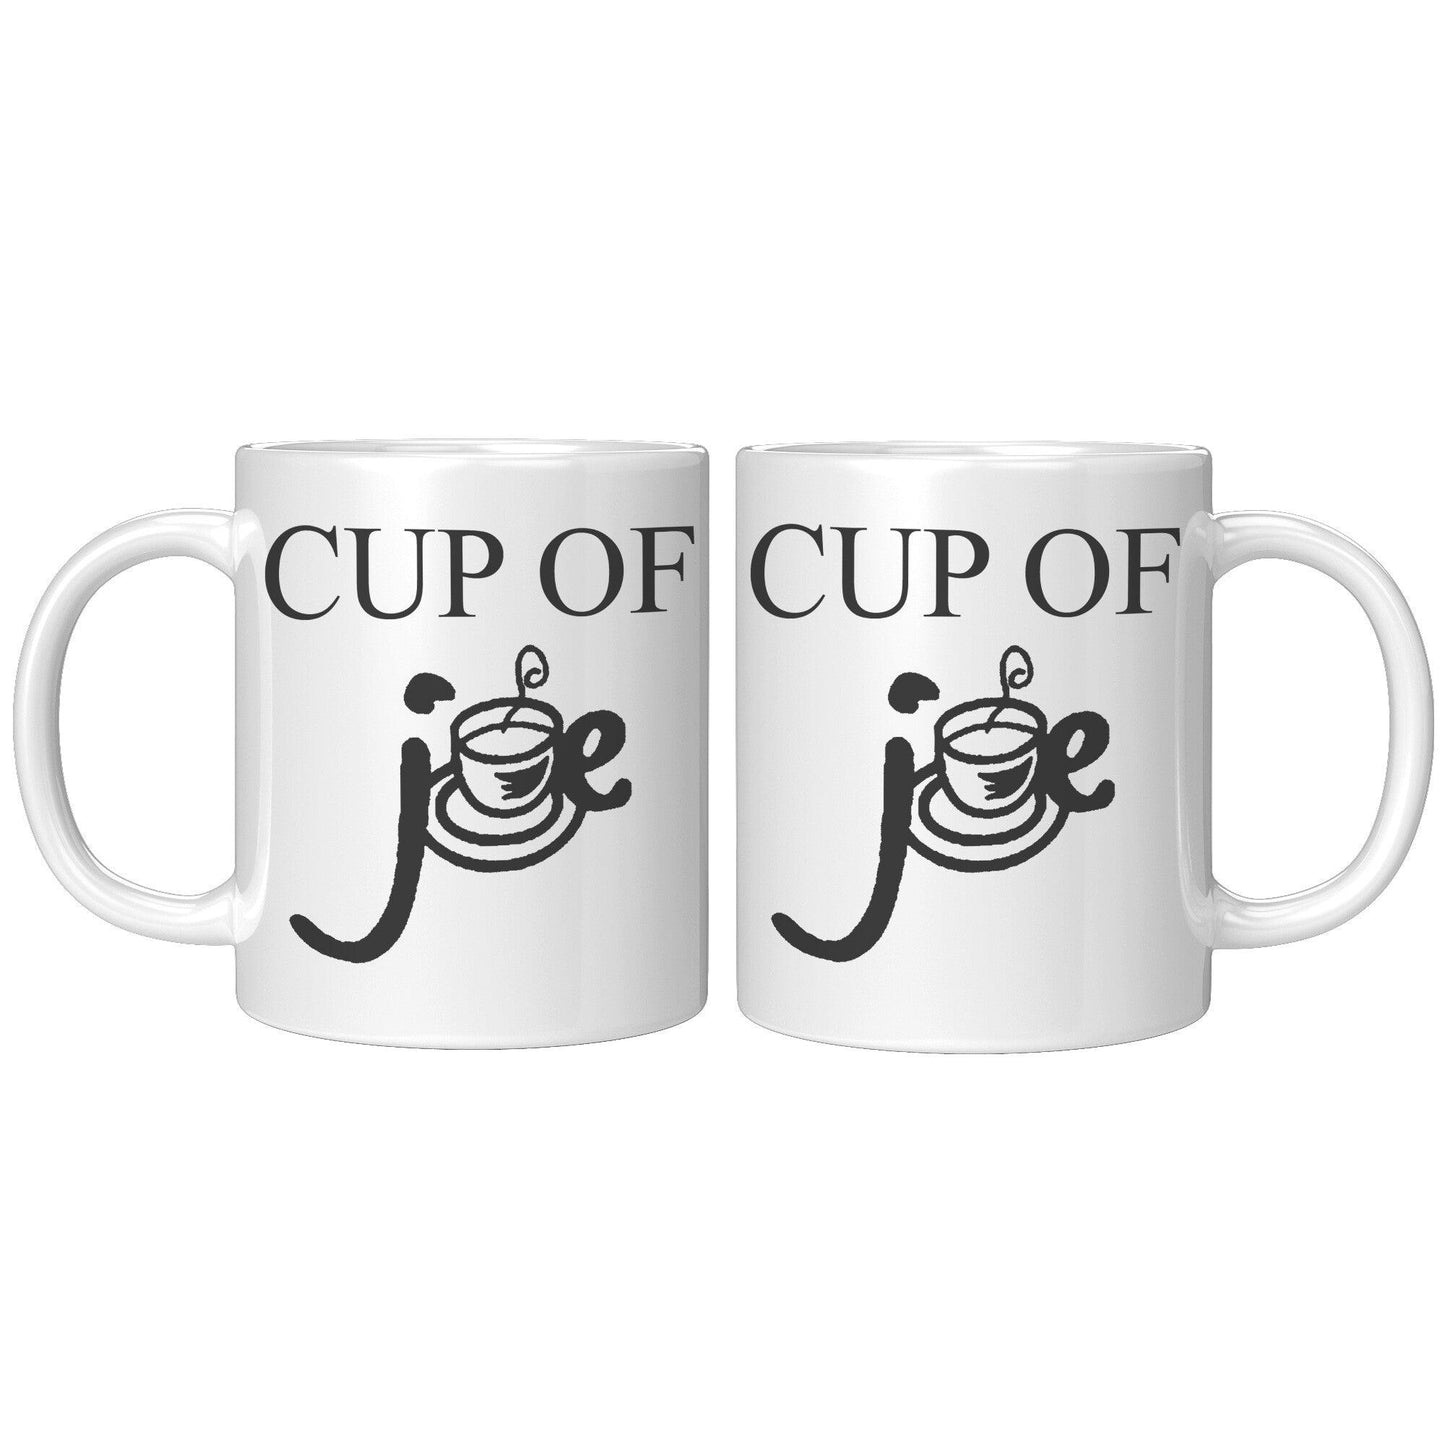 CUP OF Joe White Mug - TheGivenGet